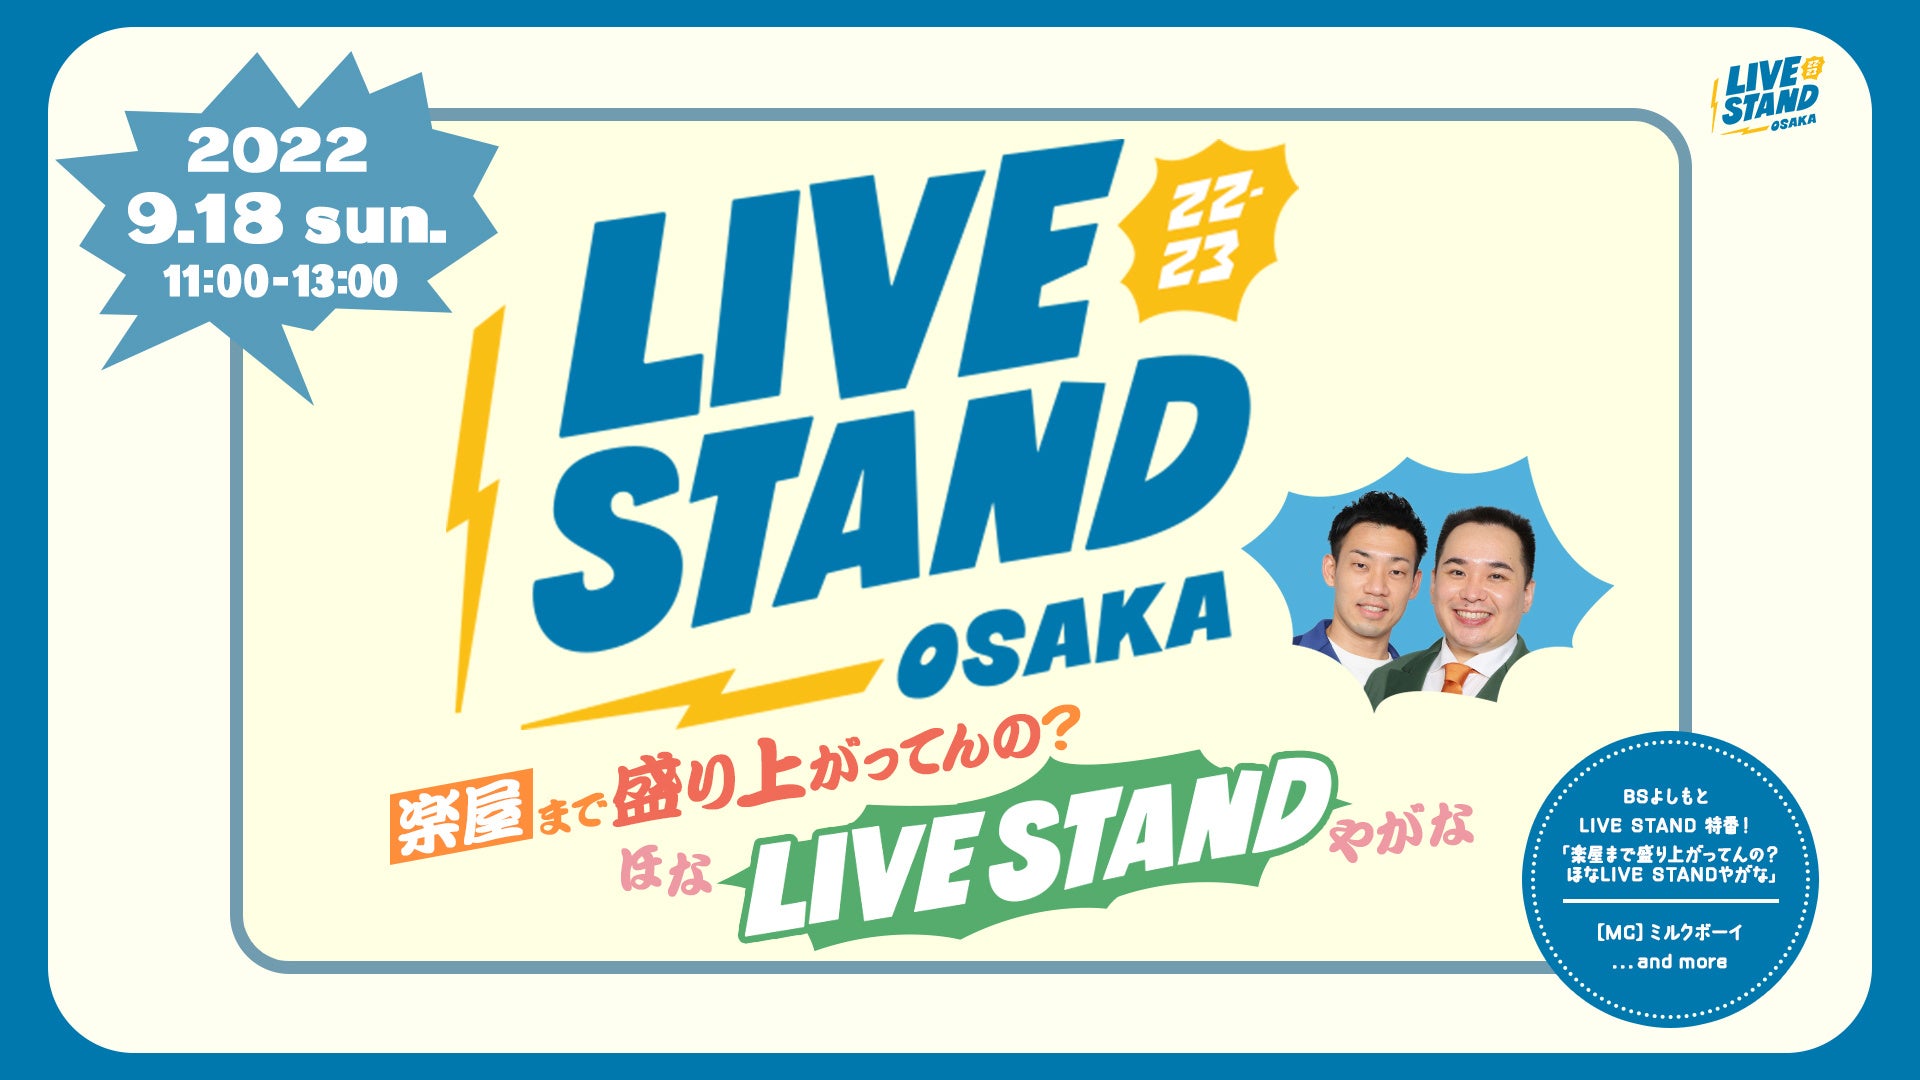 LIVE STAND大阪の会場から2時間生中継! 　視聴無料‼ 　LIVE STAND 22-23 OSAKA特番！〜楽屋まで盛り上がってんの？ほなLIVE STANDやがな〜のサブ画像1